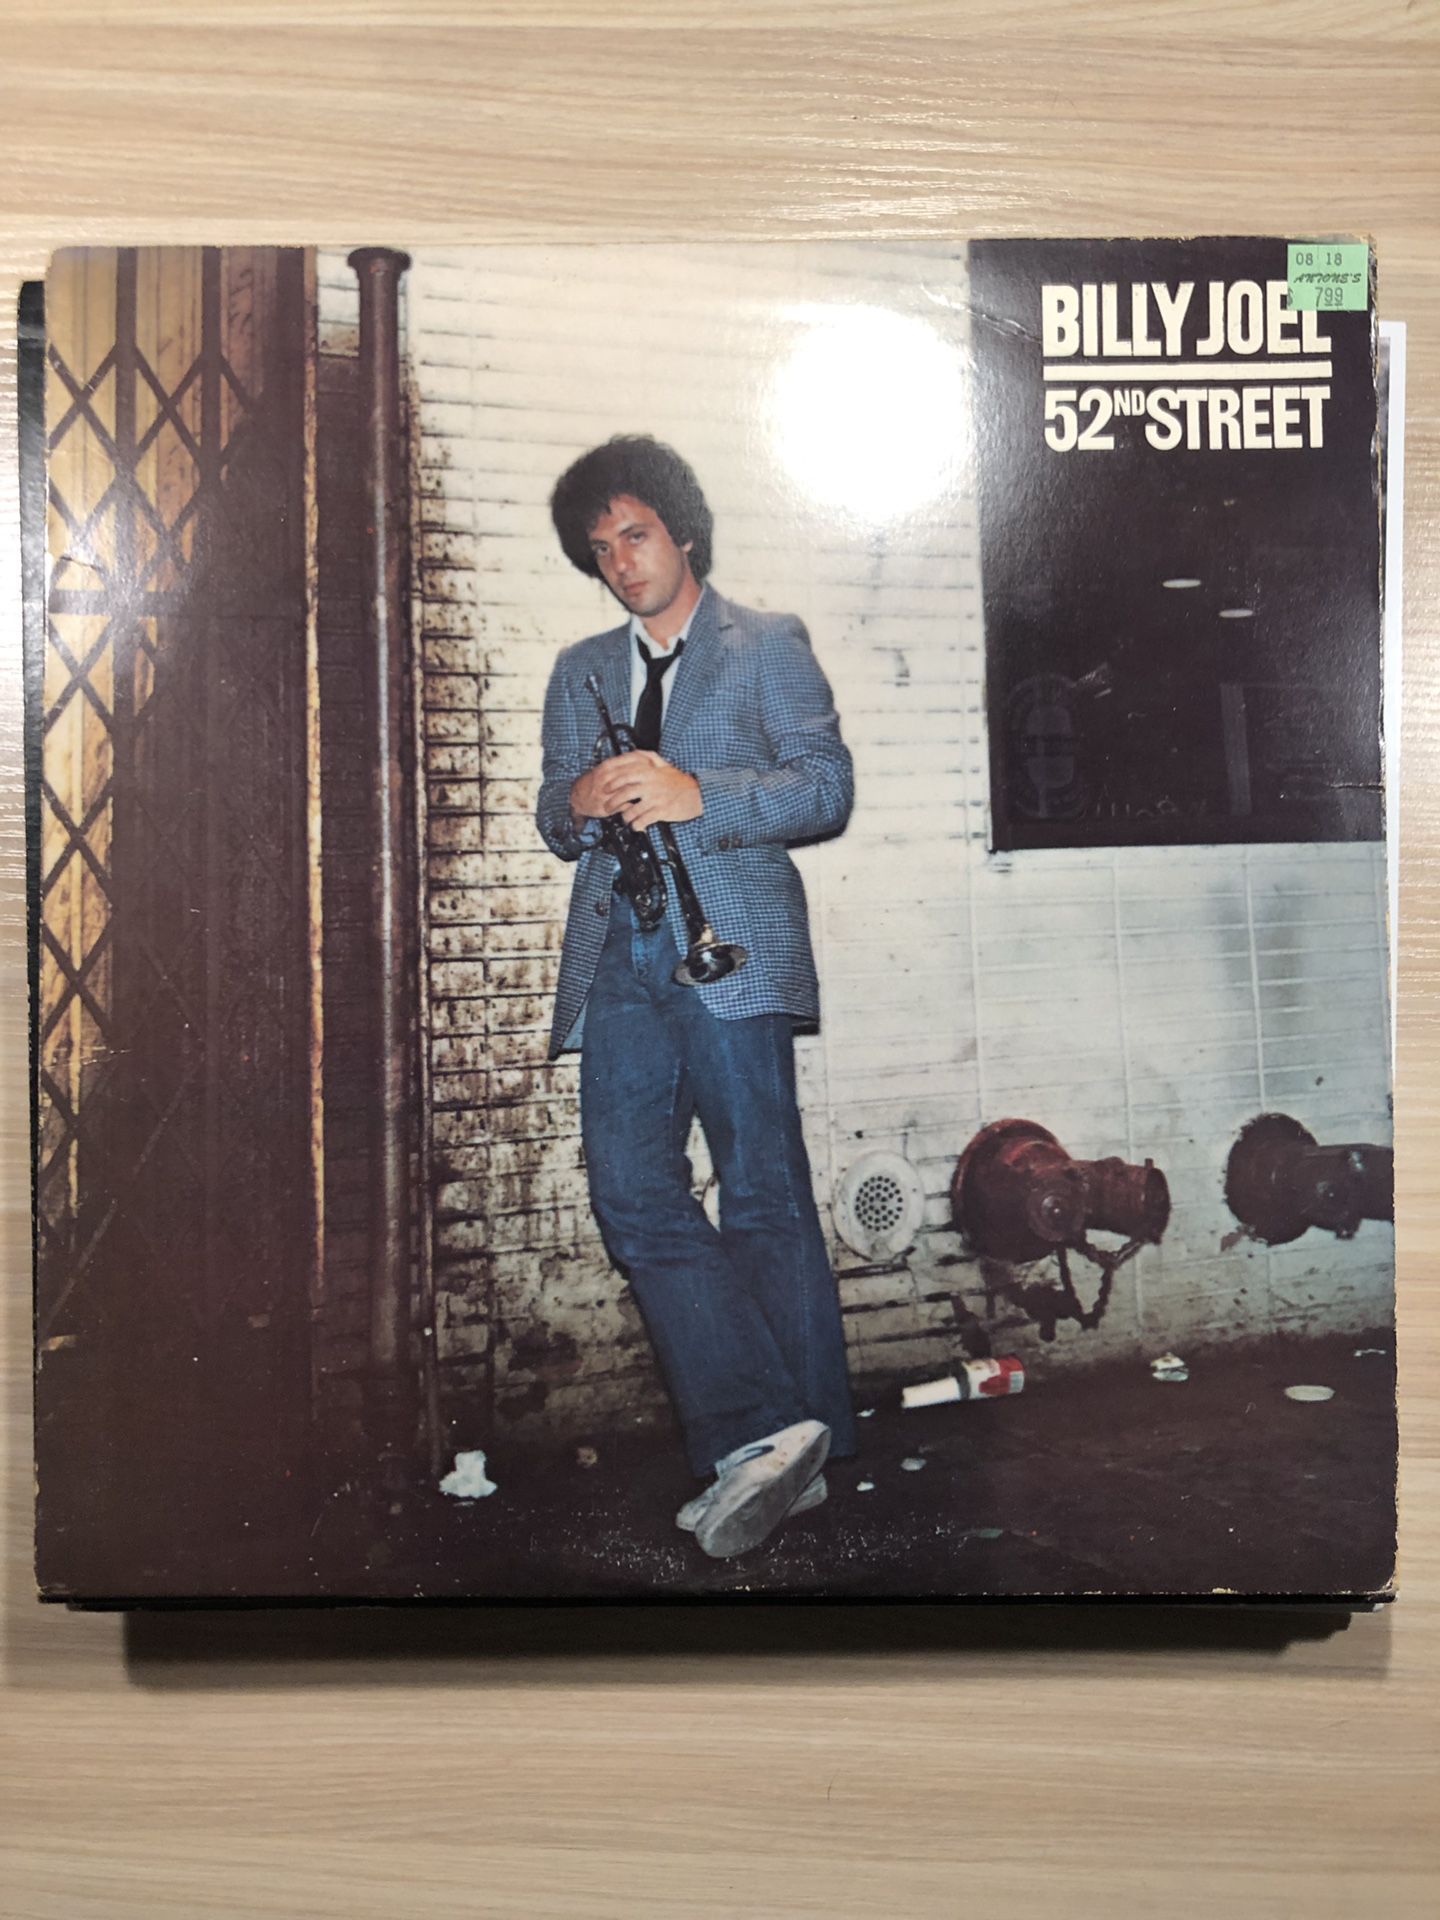 Billy Joel Album on Vinyl